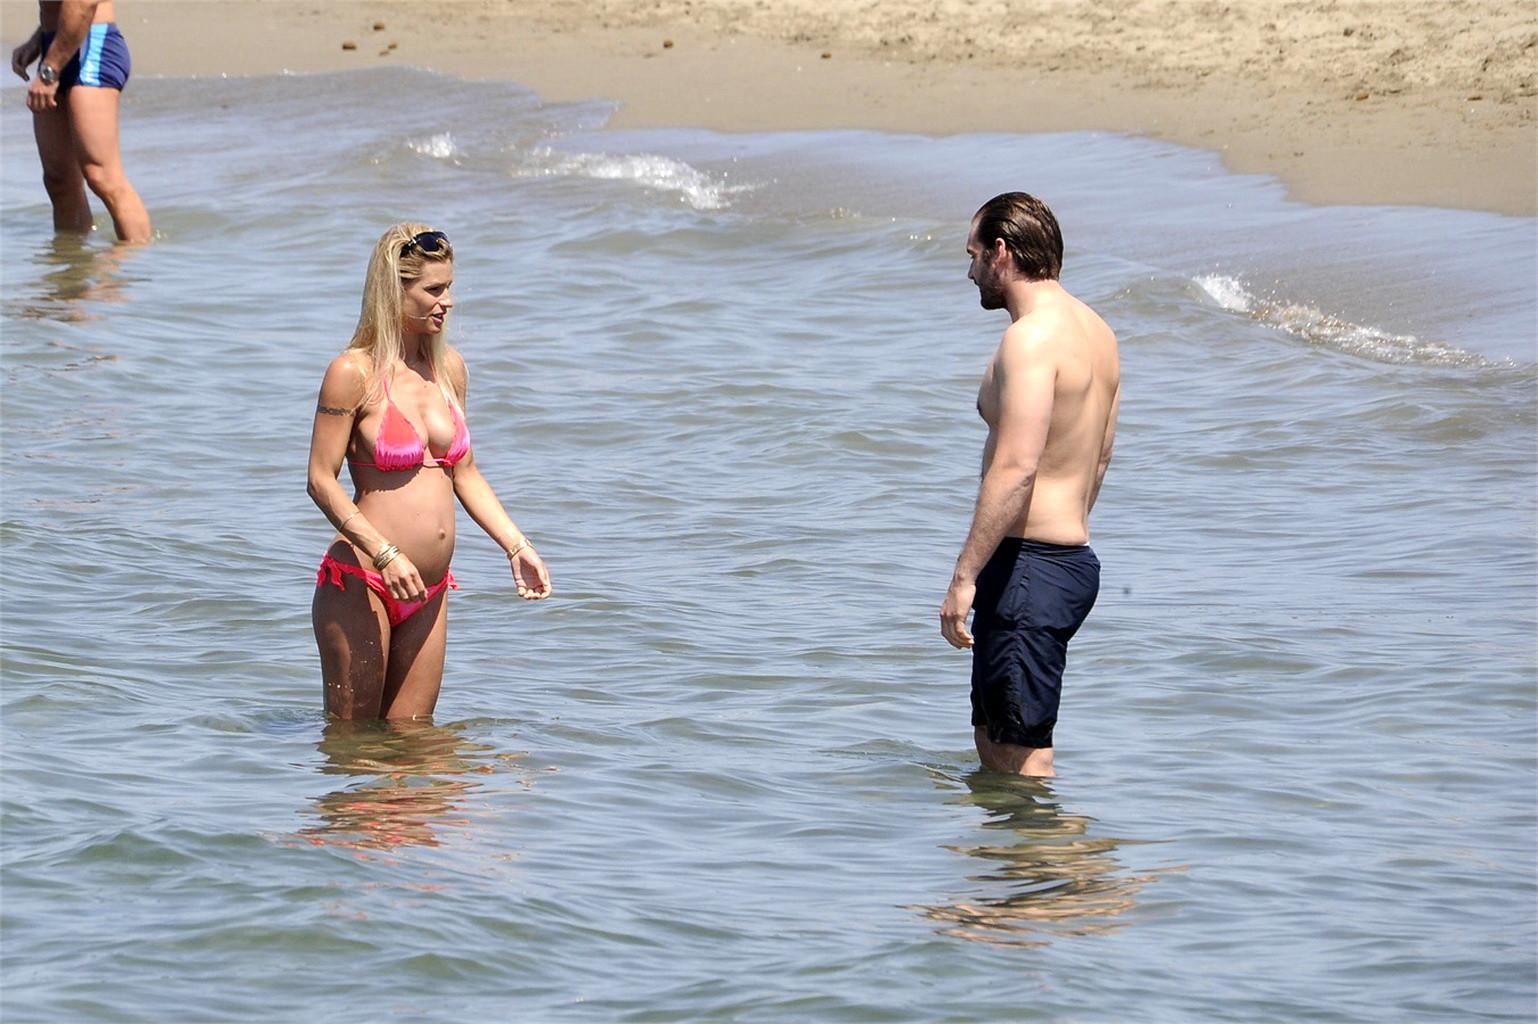 Michelle hunziker embarazada con un bikini en la playa de forte dei marmi, ita
 #75227902